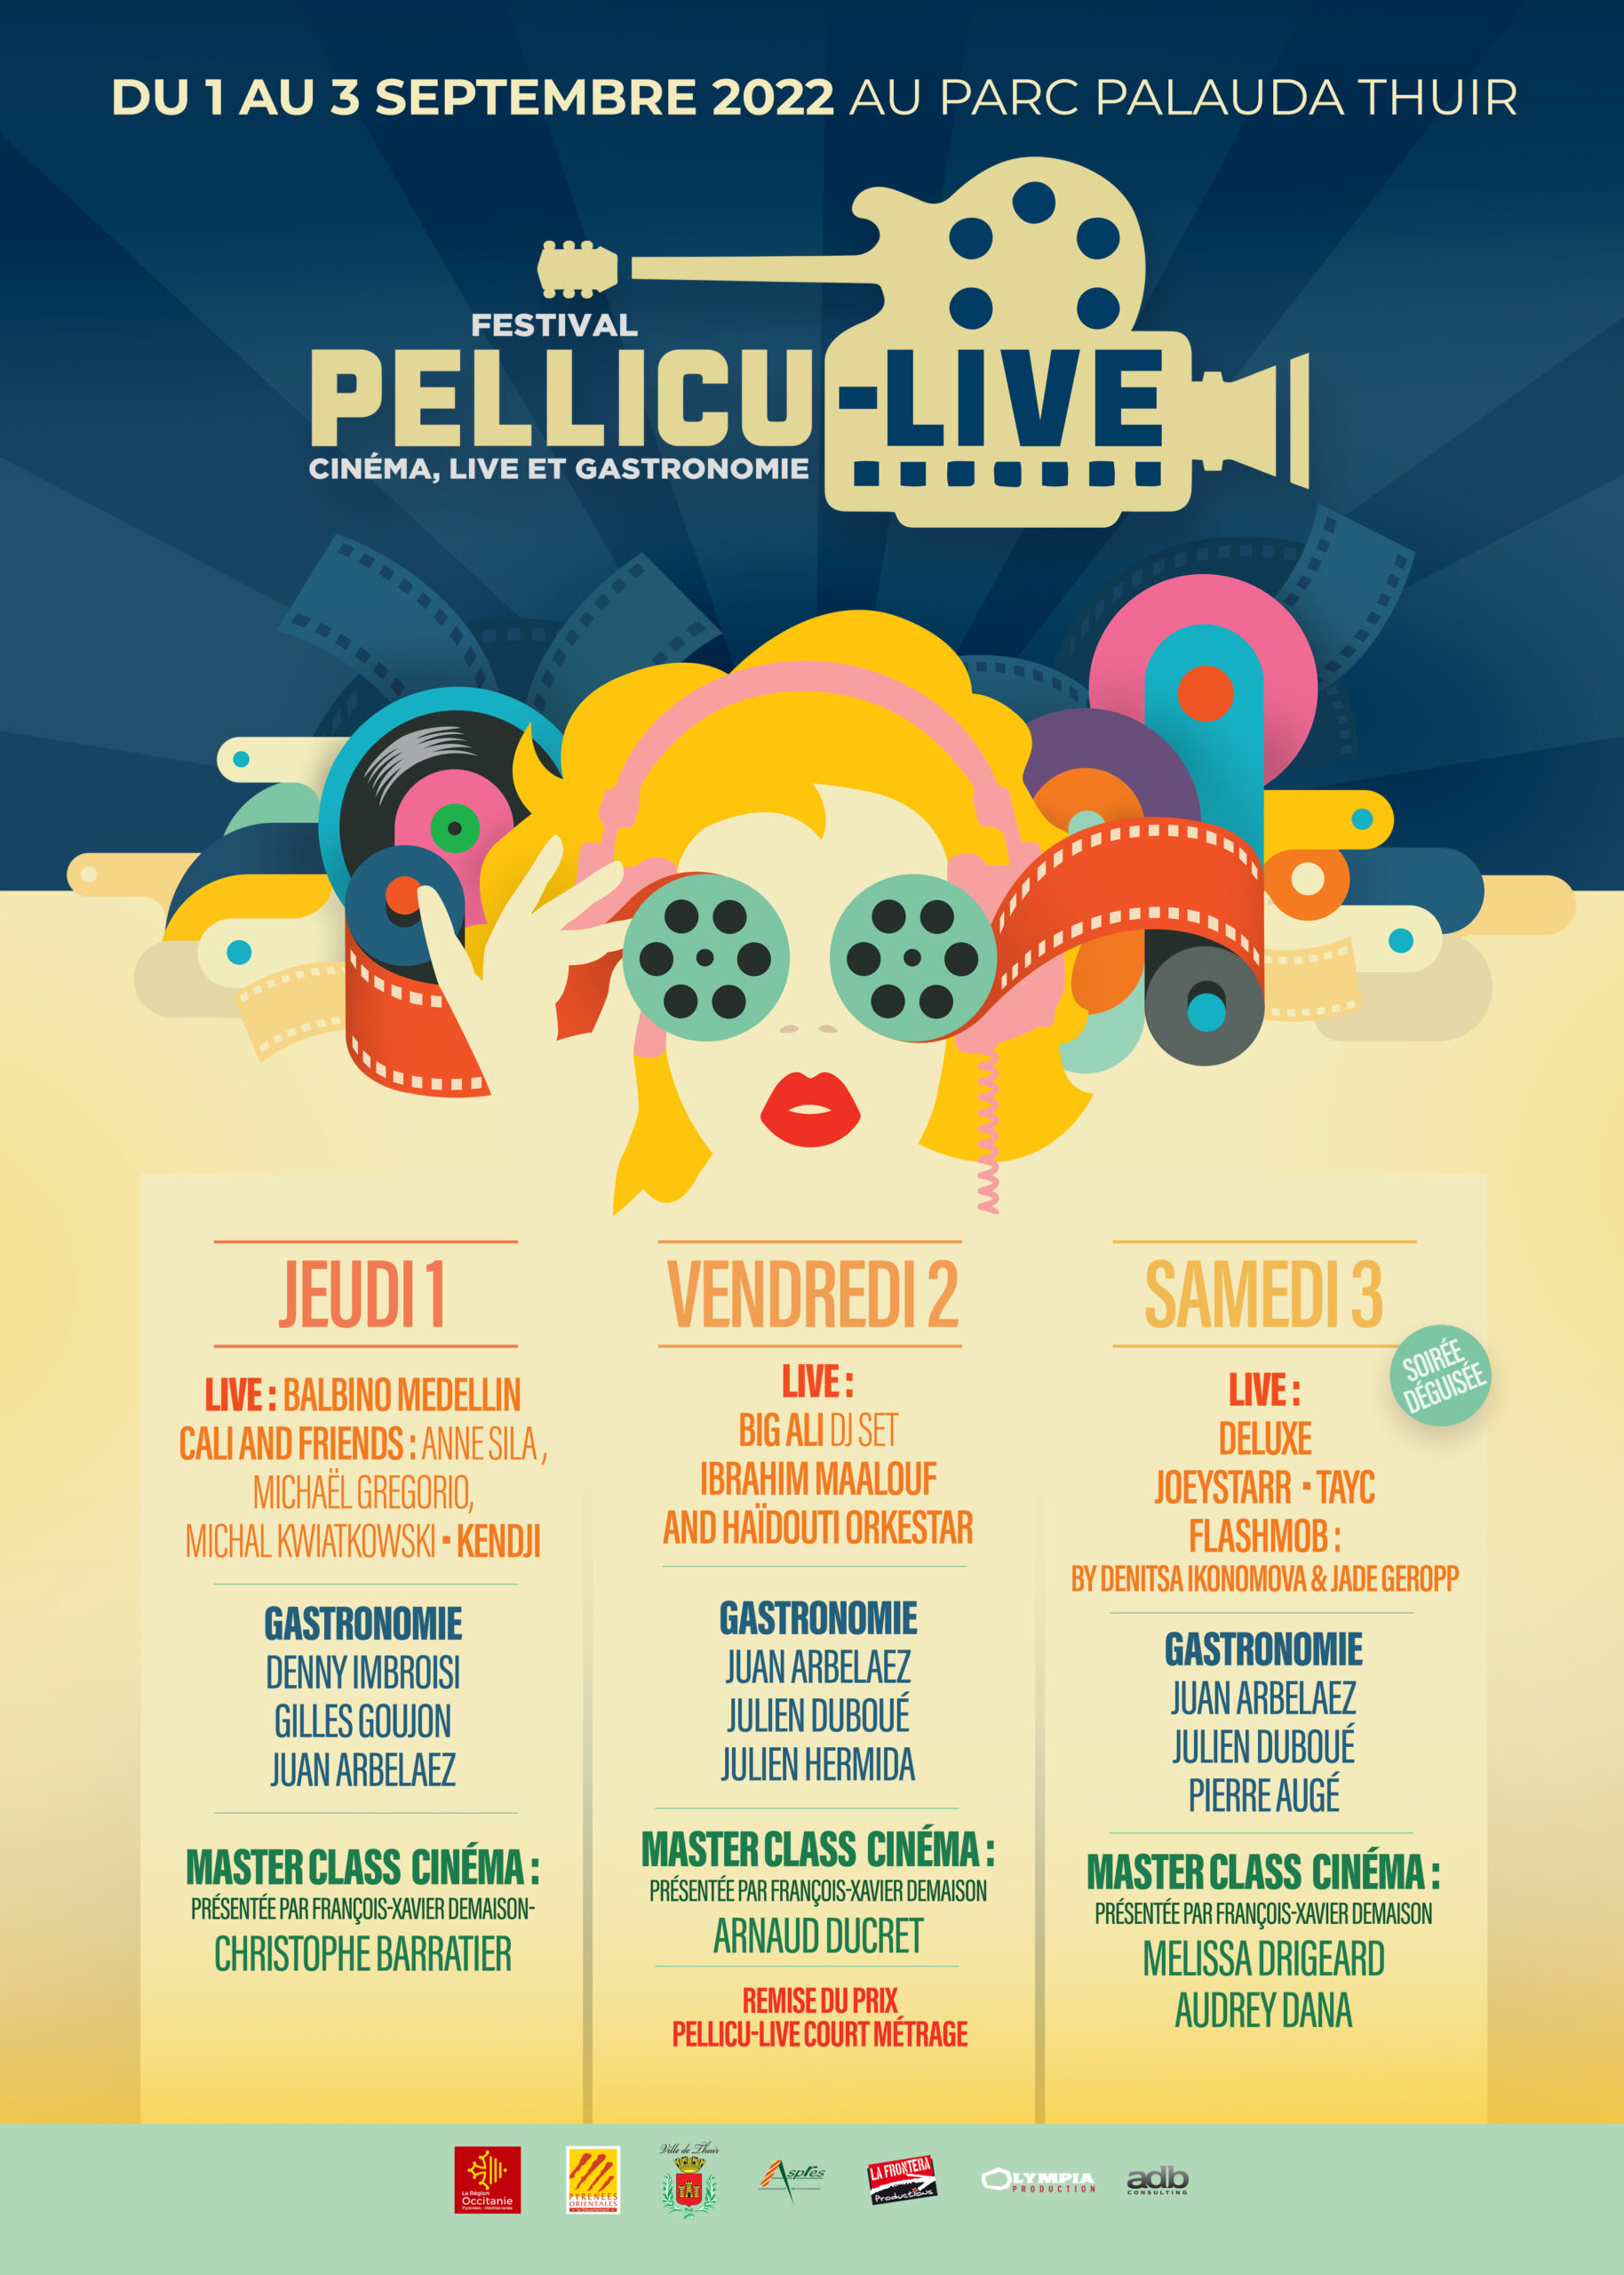 Pellicu-live est de retour!